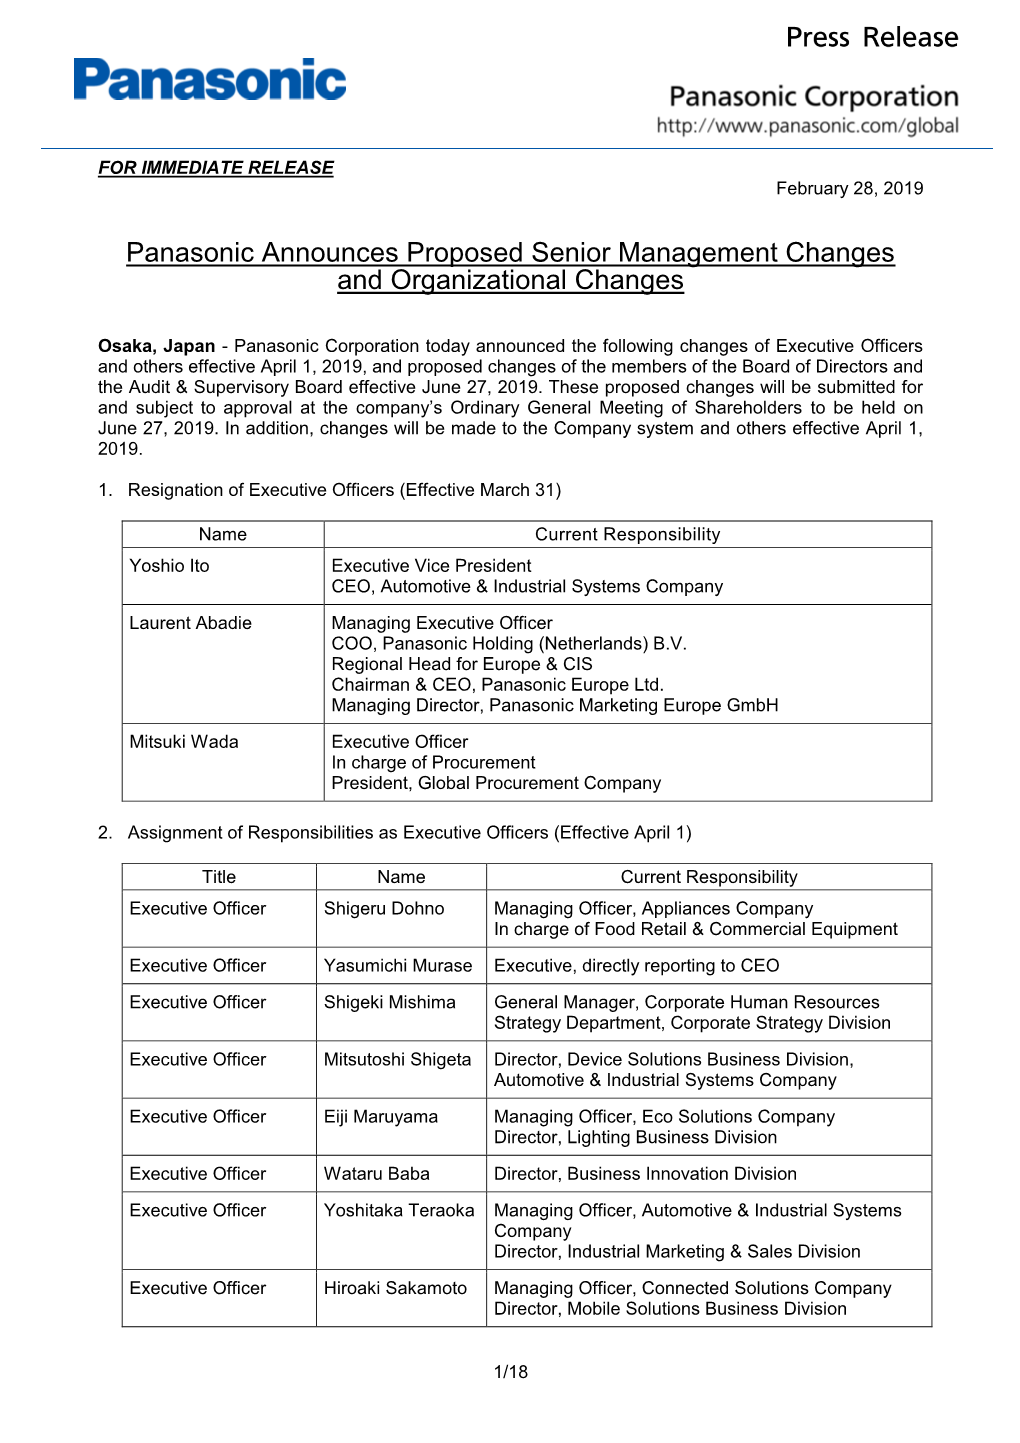 Panasonic Announces Proposed Senior Management Changes and Organizational Changes